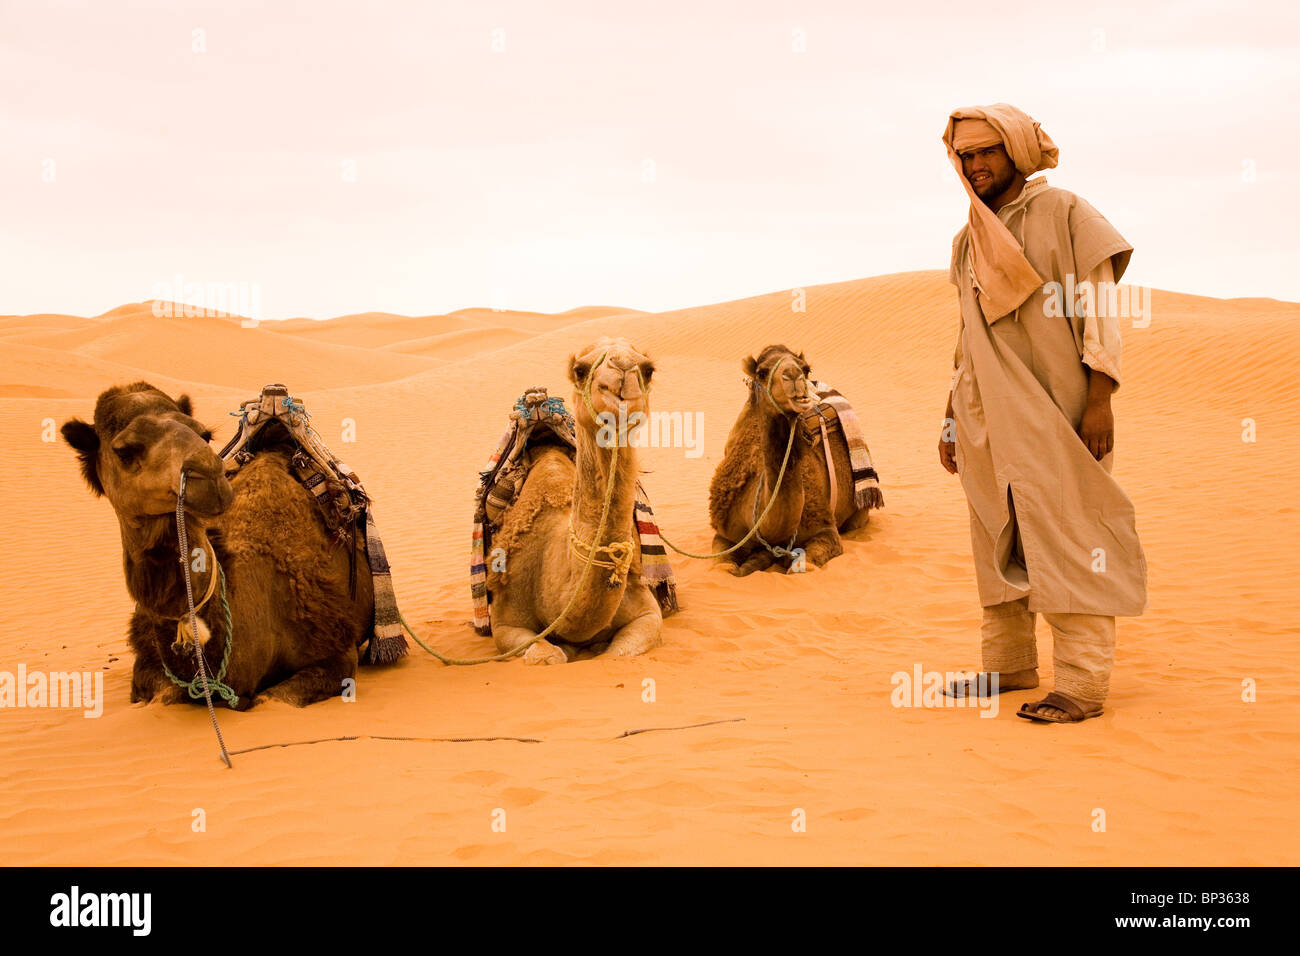 An Arab man stands next to camels sitting in the Sahara Desert at Ksar Ghilane, Tunisia. Stock Photo